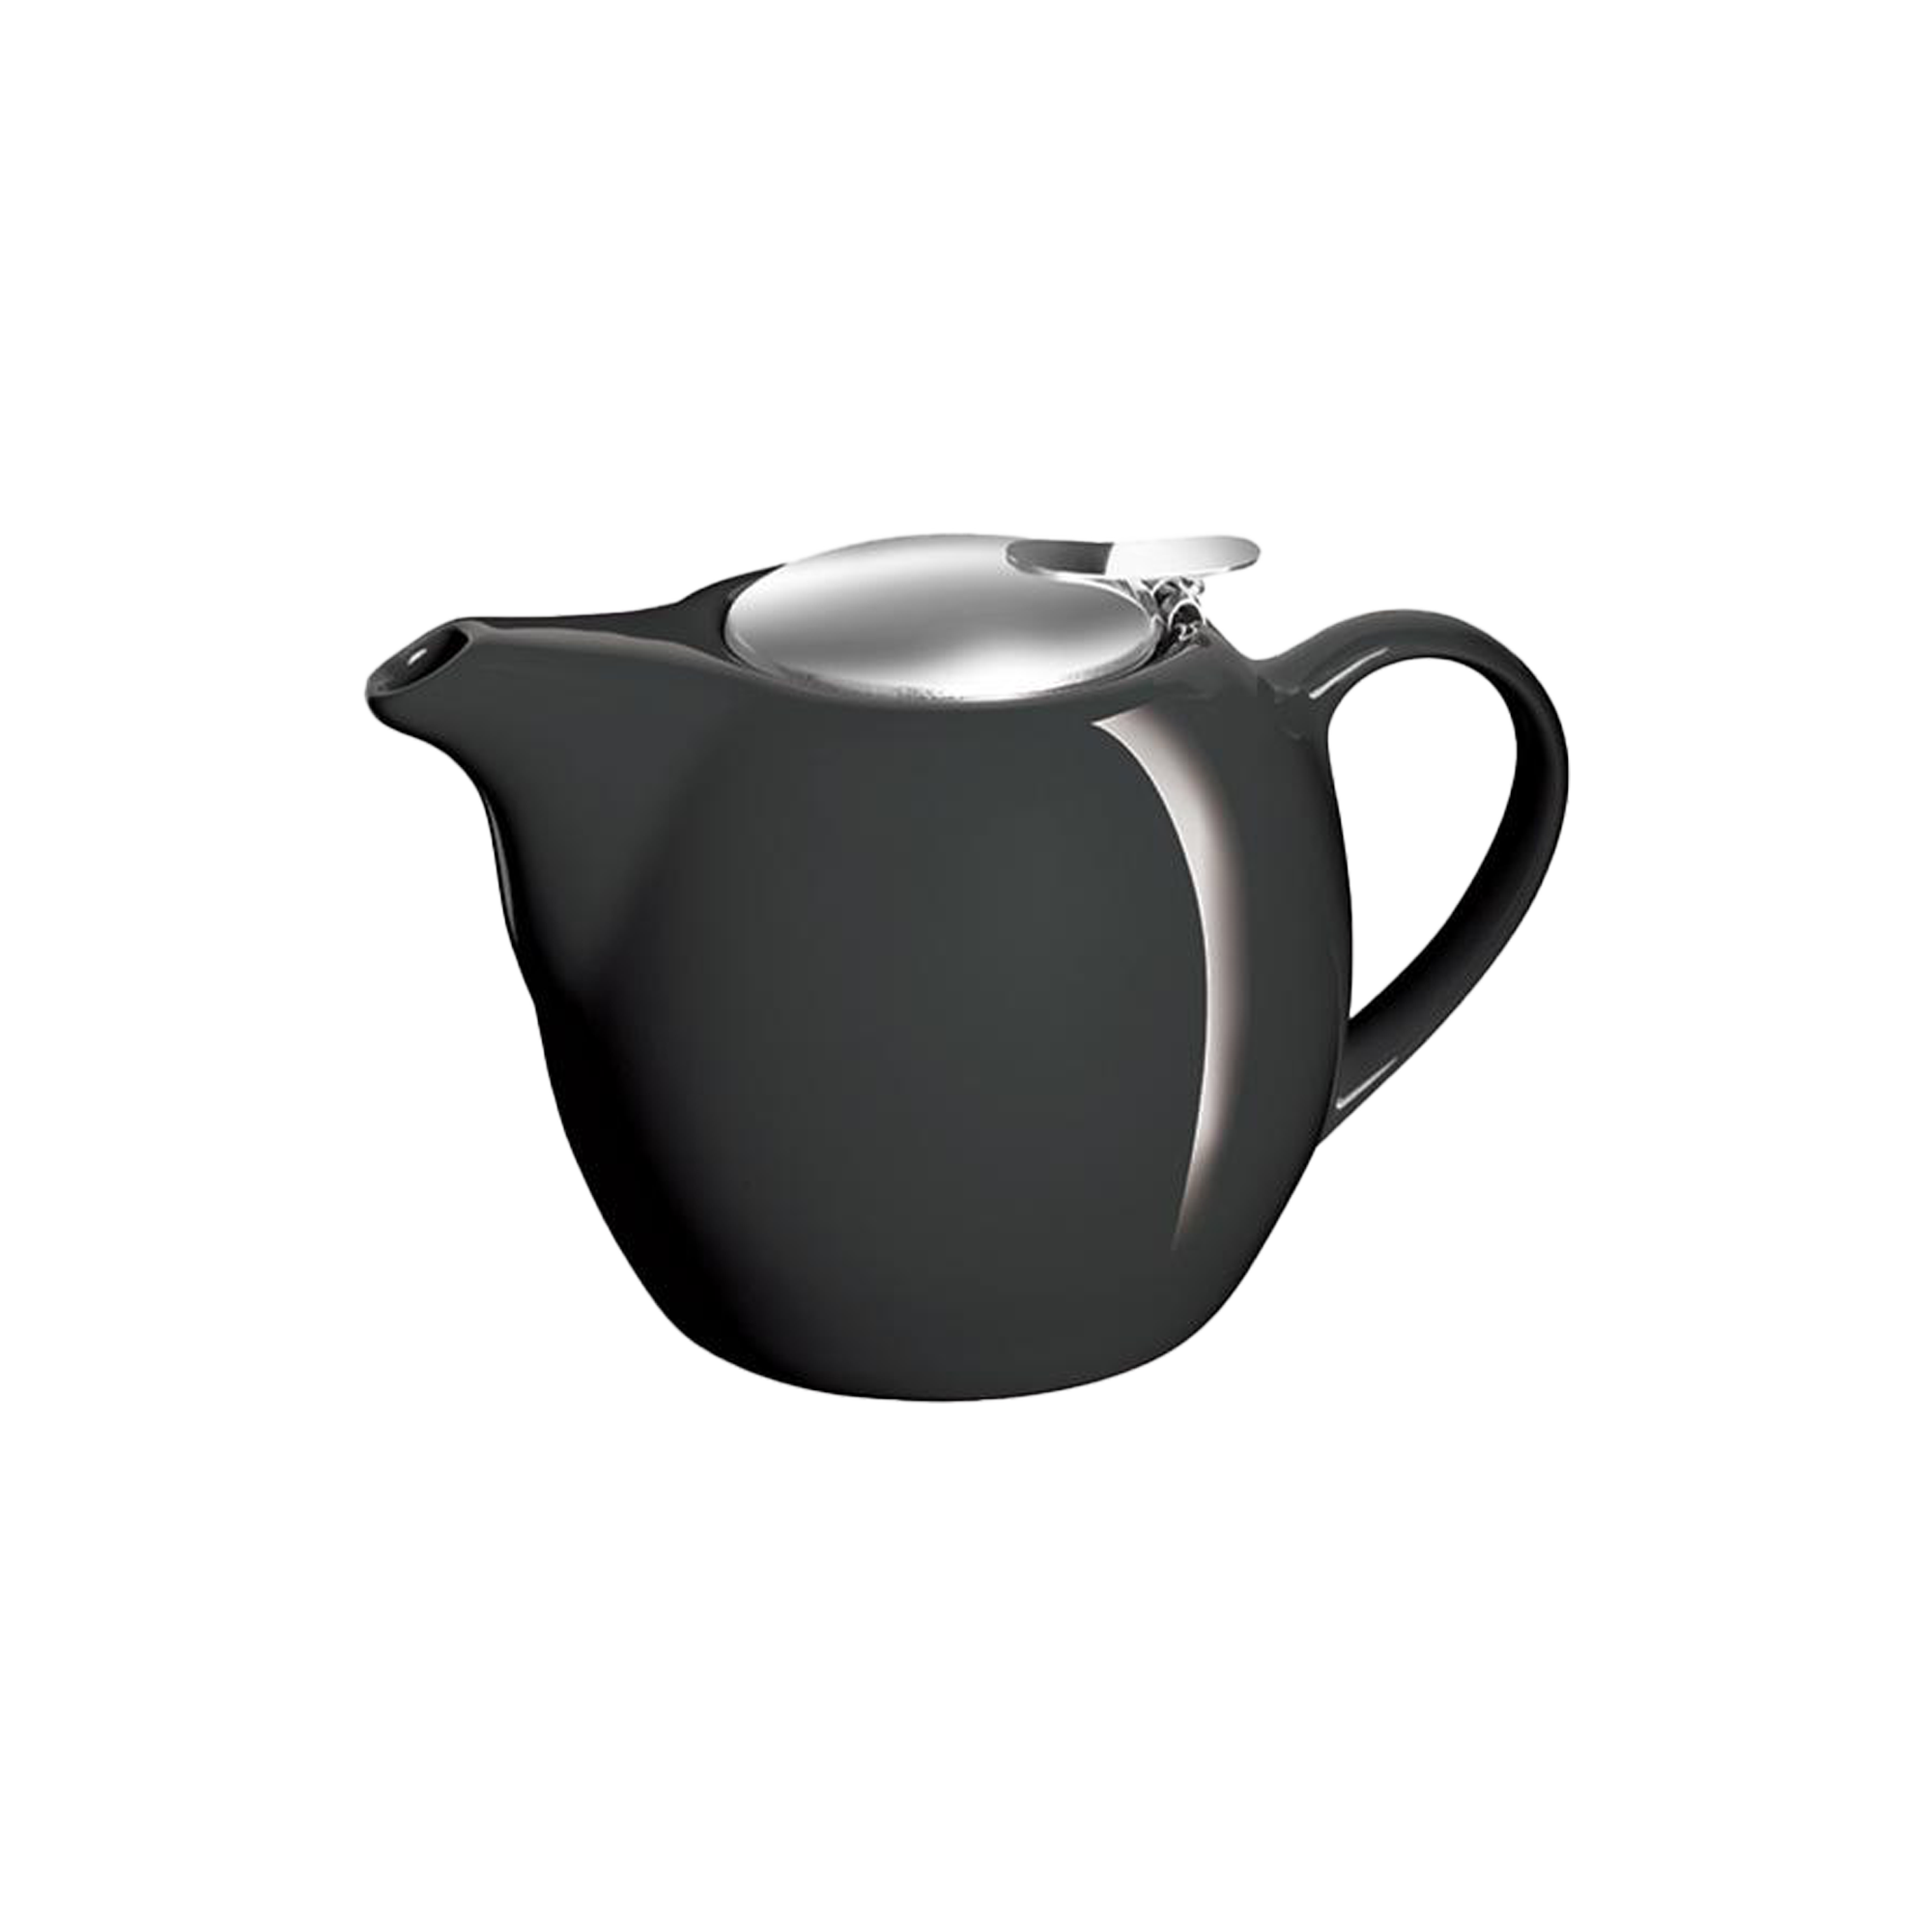 https://cdn.shopify.com/s/files/1/2990/7432/products/teaware-teapot-black.png?v=1652842314&width=2000